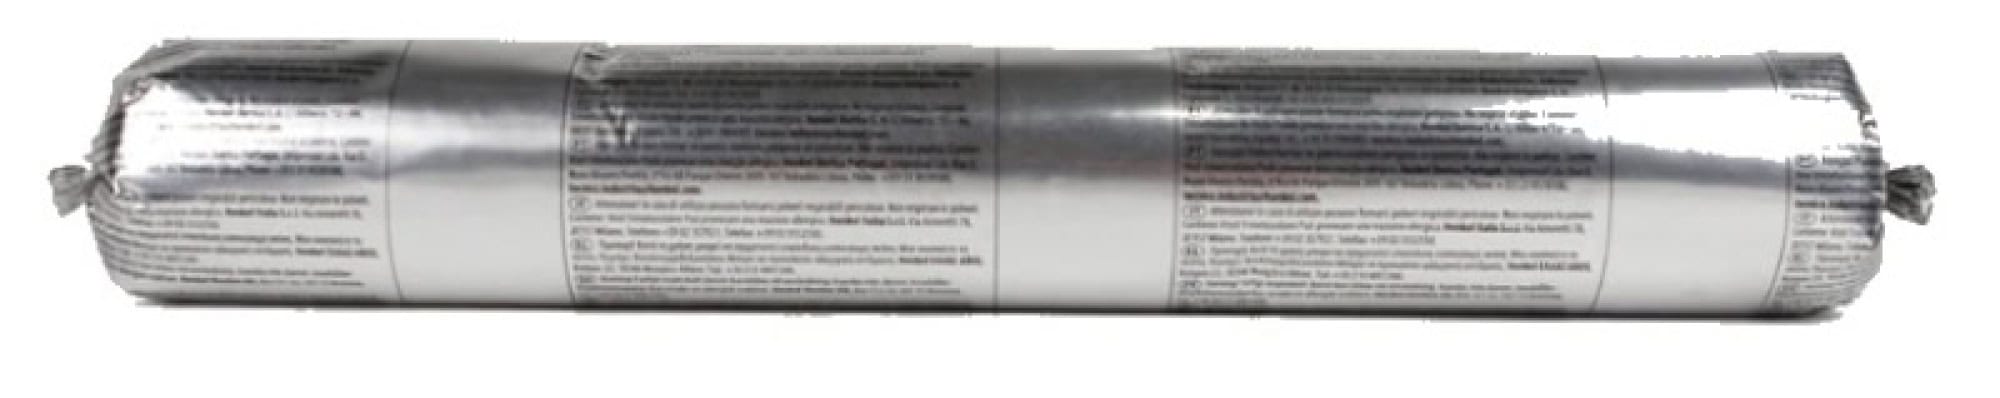 Henkel™ Teroson® Silanmodifizierter Polymer Kleb-/Dichtstoff MS 935, 570 ml Folienbeutel, Grau, Thixotrop, 1K, 2487235, Für Elektronik Anwendungen